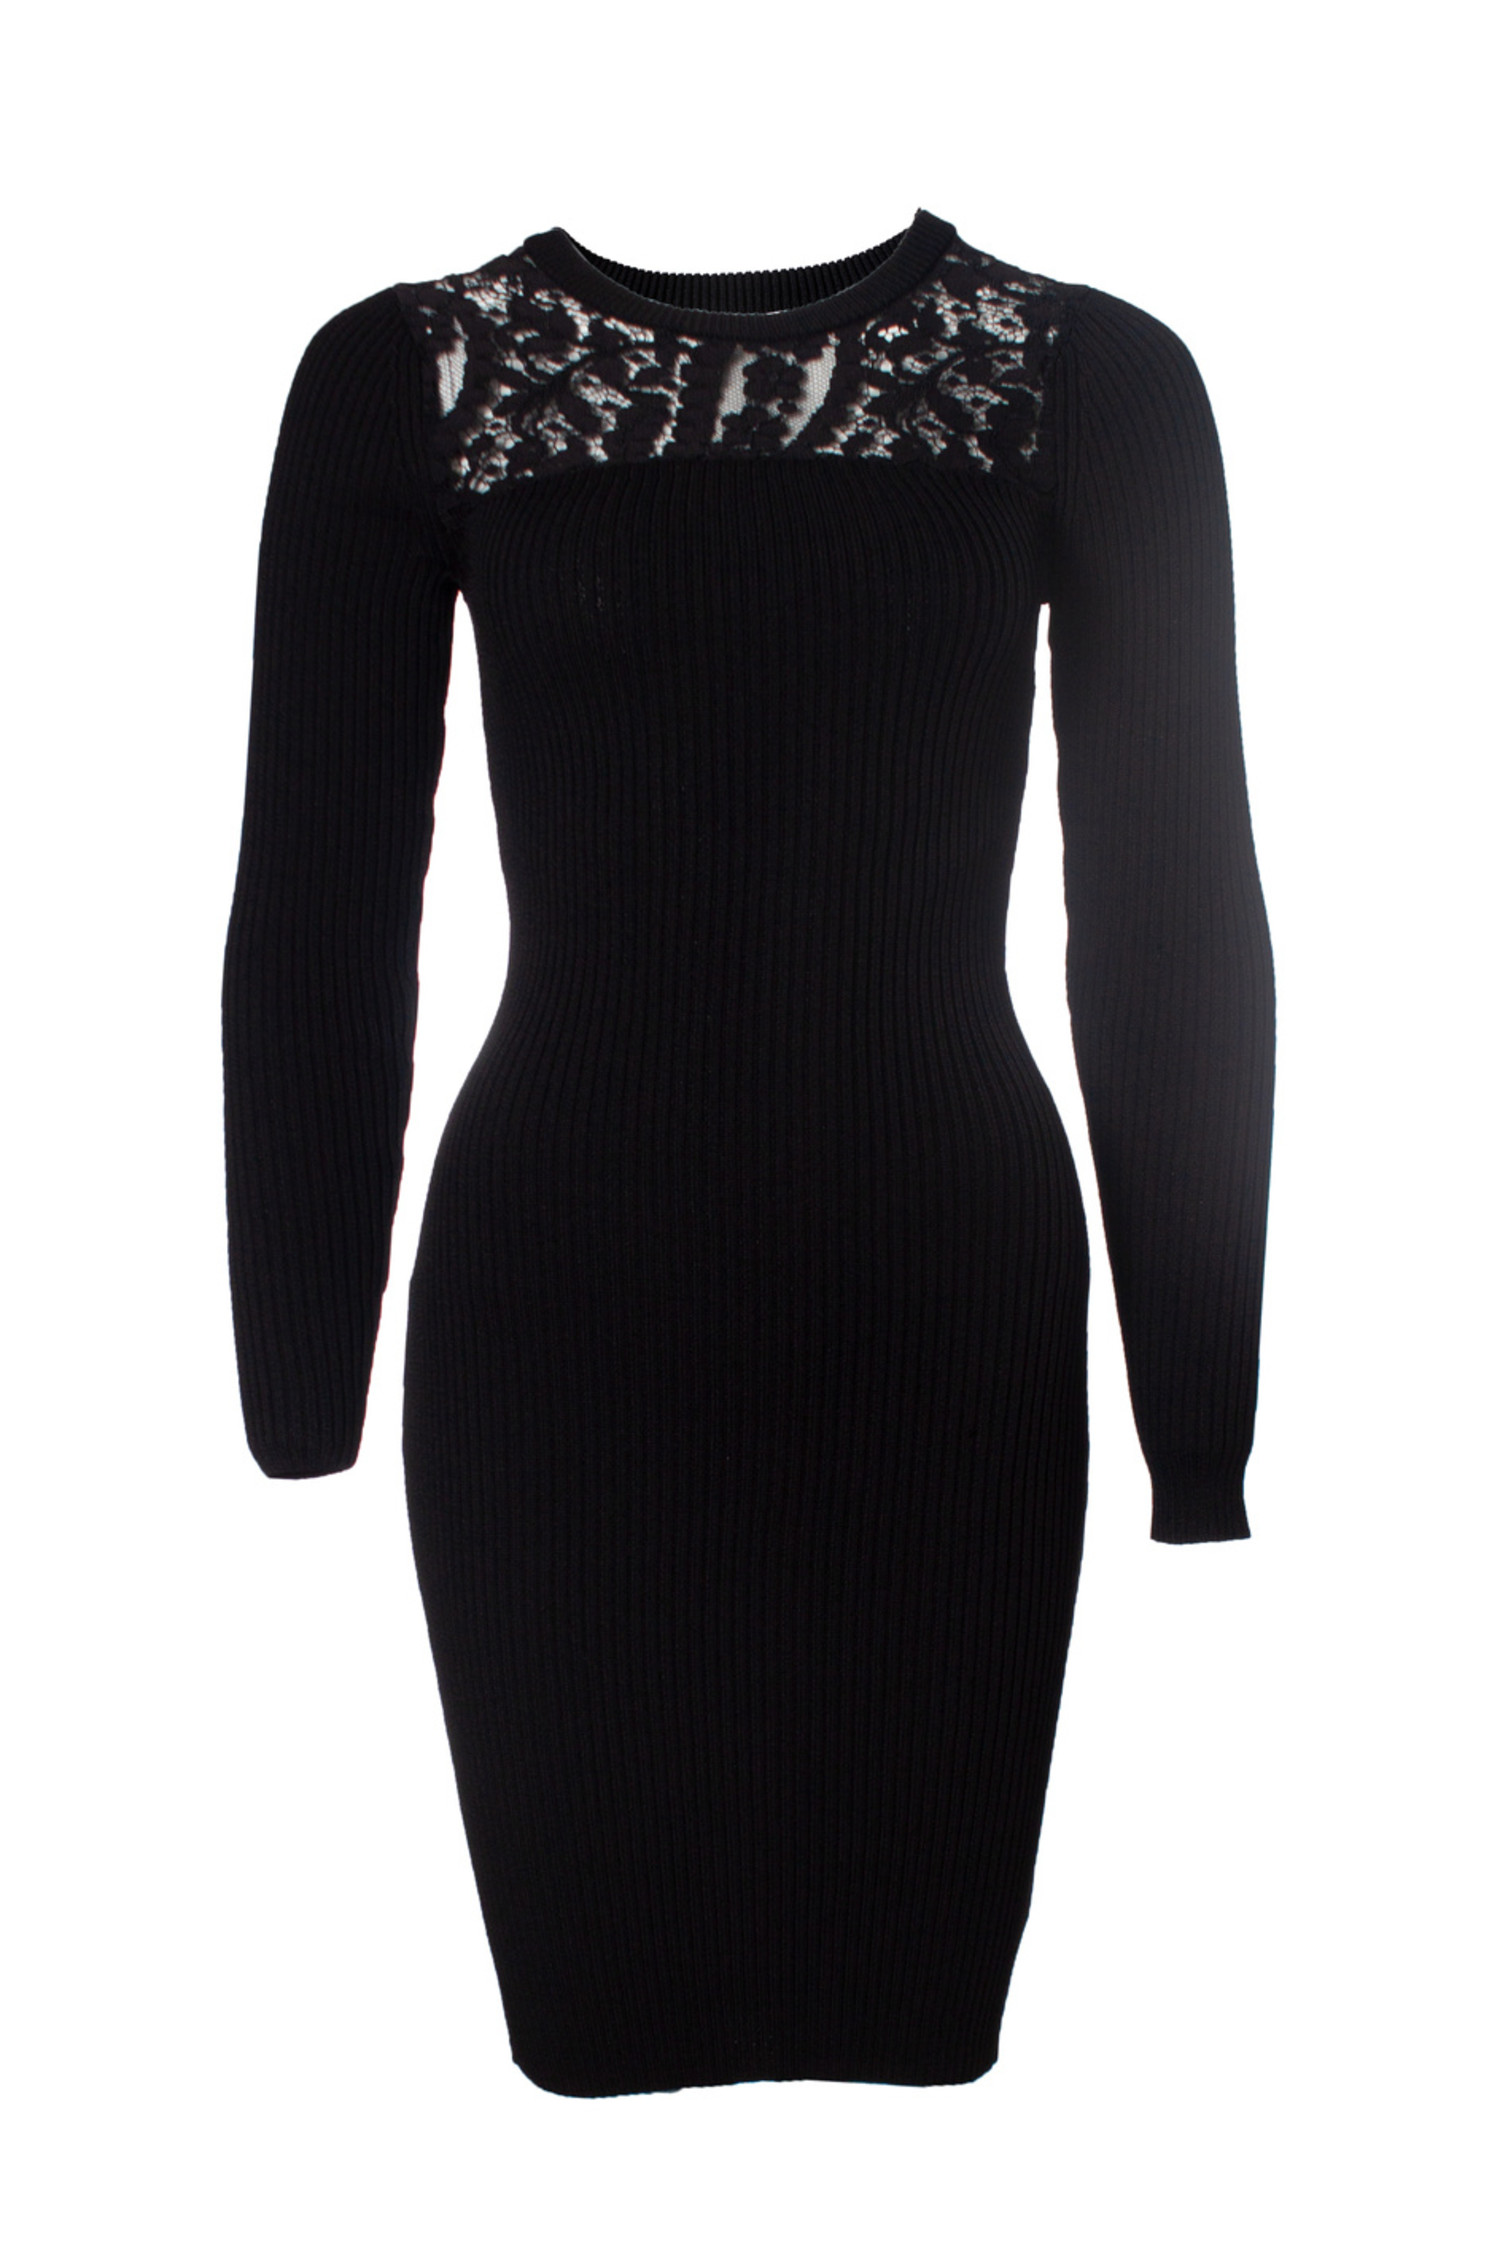 https://cdn.webshopapp.com/shops/89710/files/412185093/1500x4000x3/michael-kors-michael-kors-black-stretch-dress.jpg